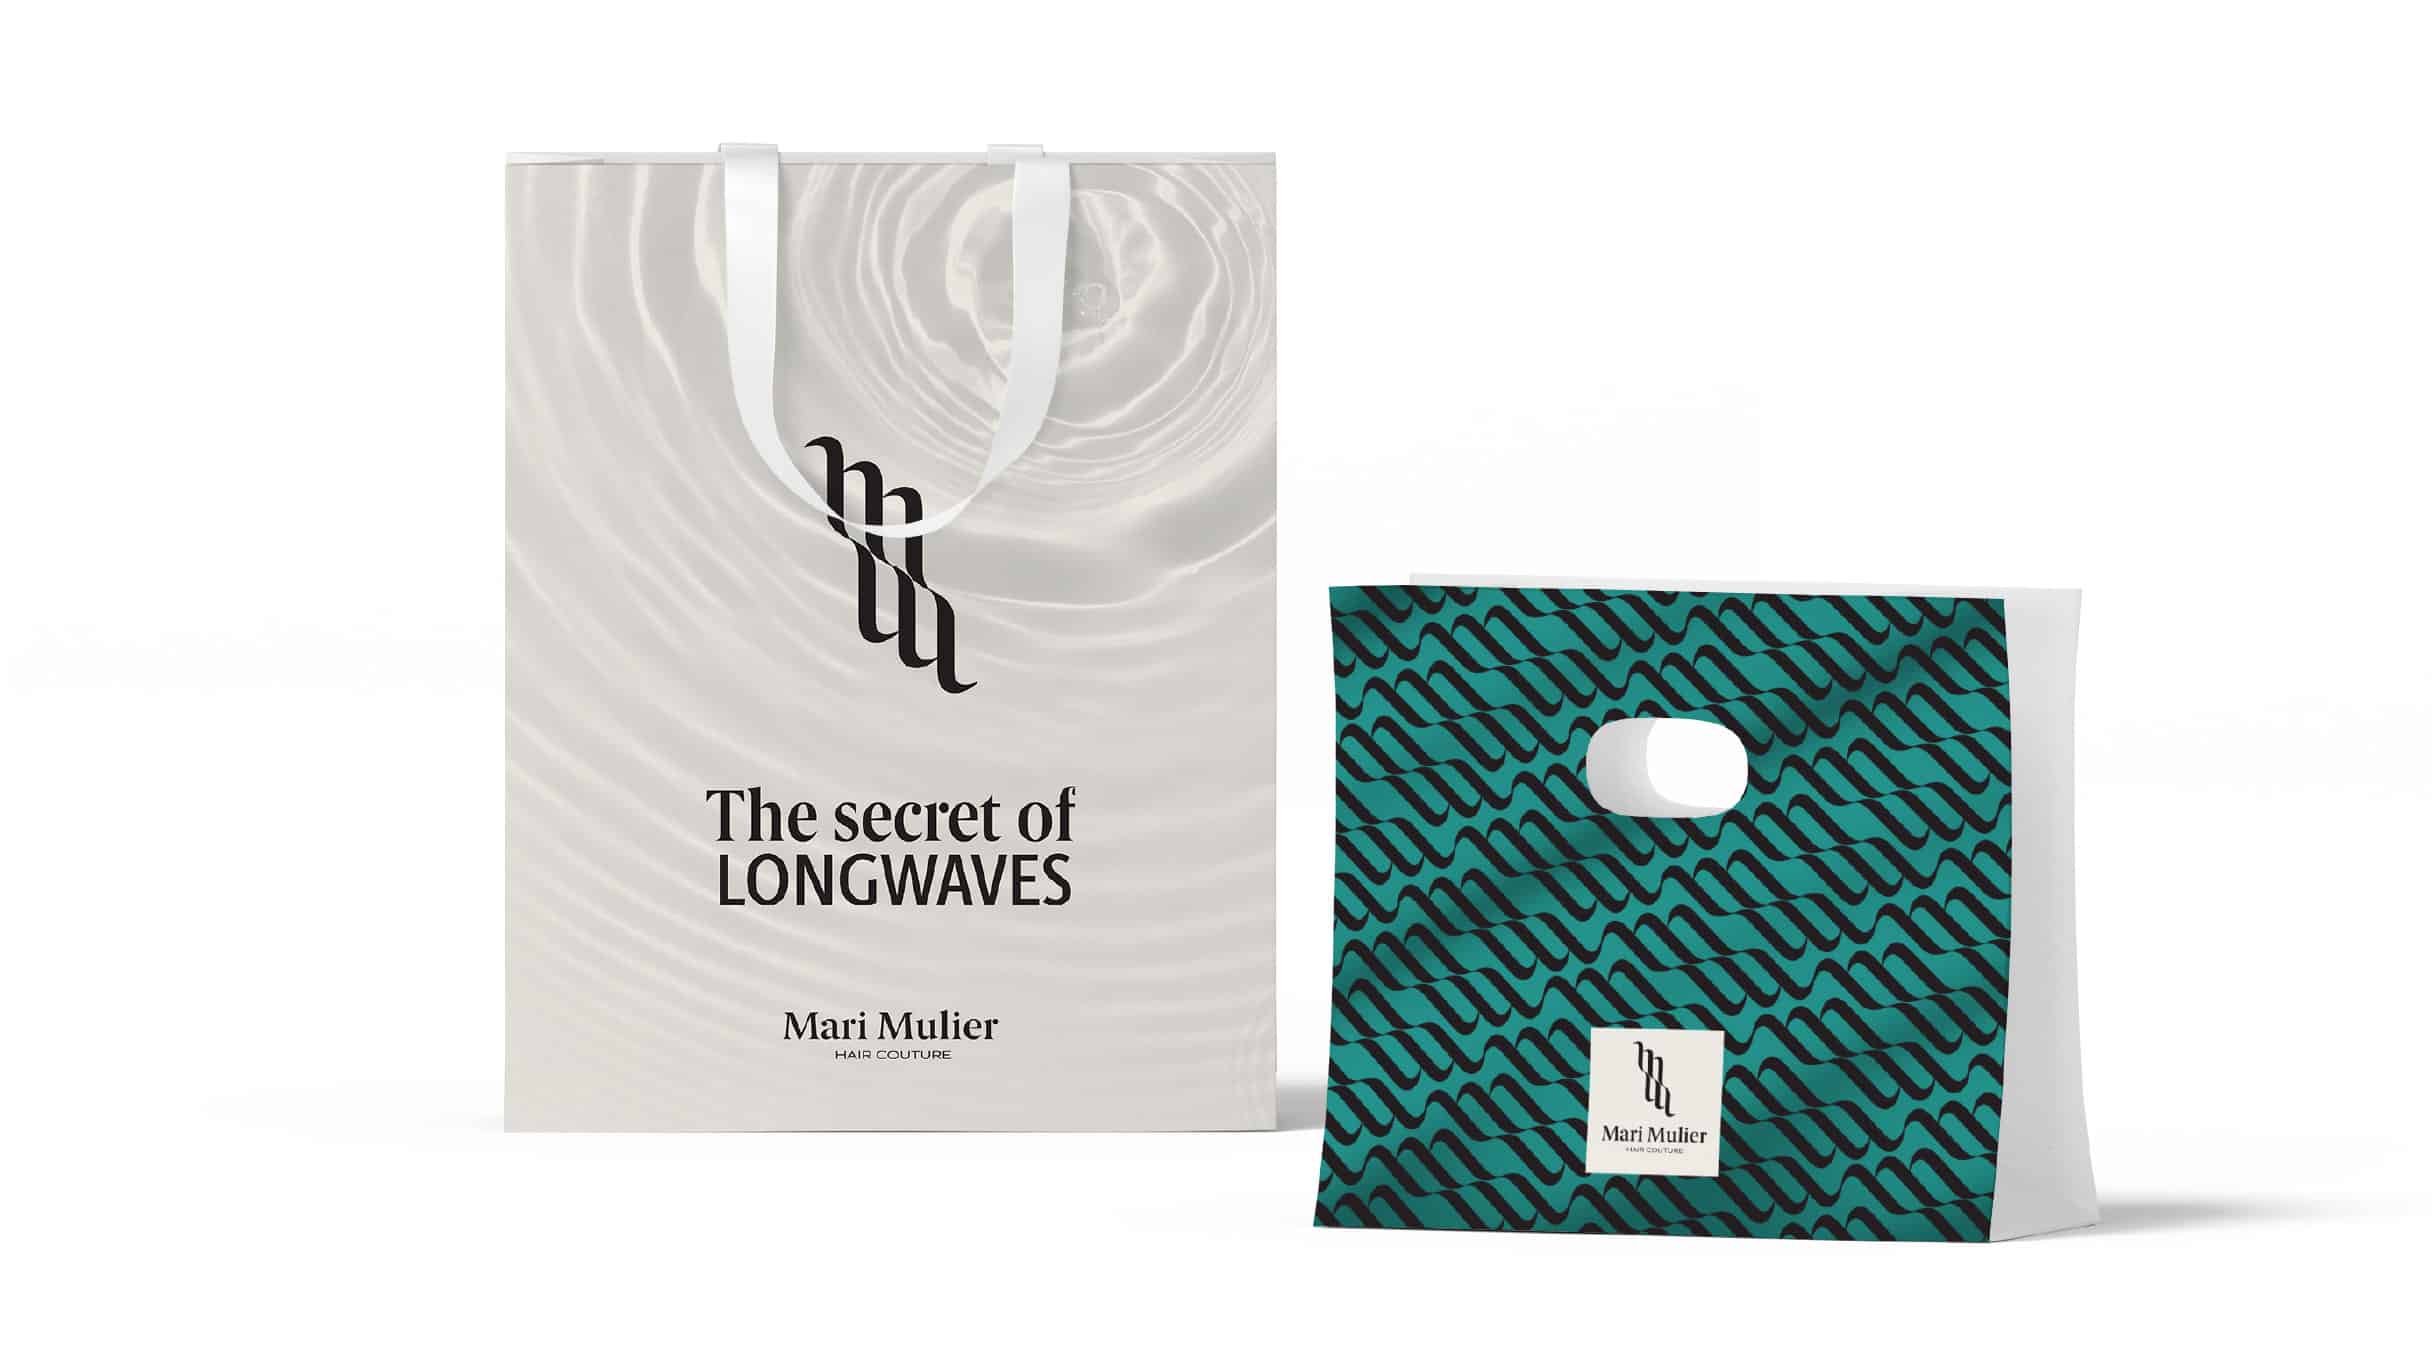 Mari Mulier -  branding, verbalni identitet, vizualni identitet, brand strategija, prilagodba interijera